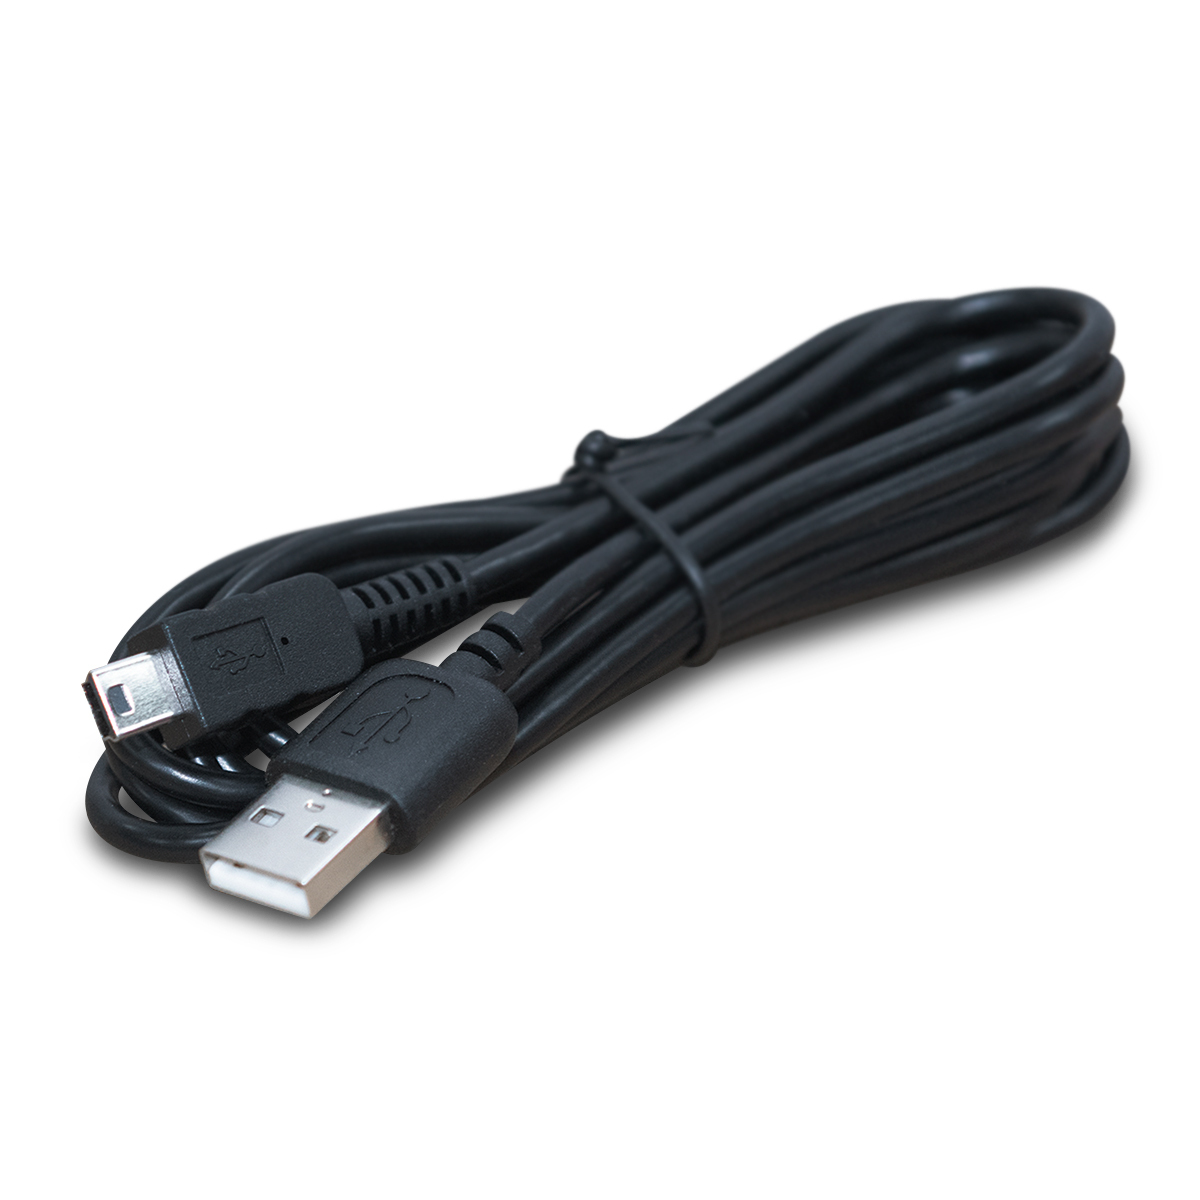 Cable USB a Mini USB RadioShack 1.82 m